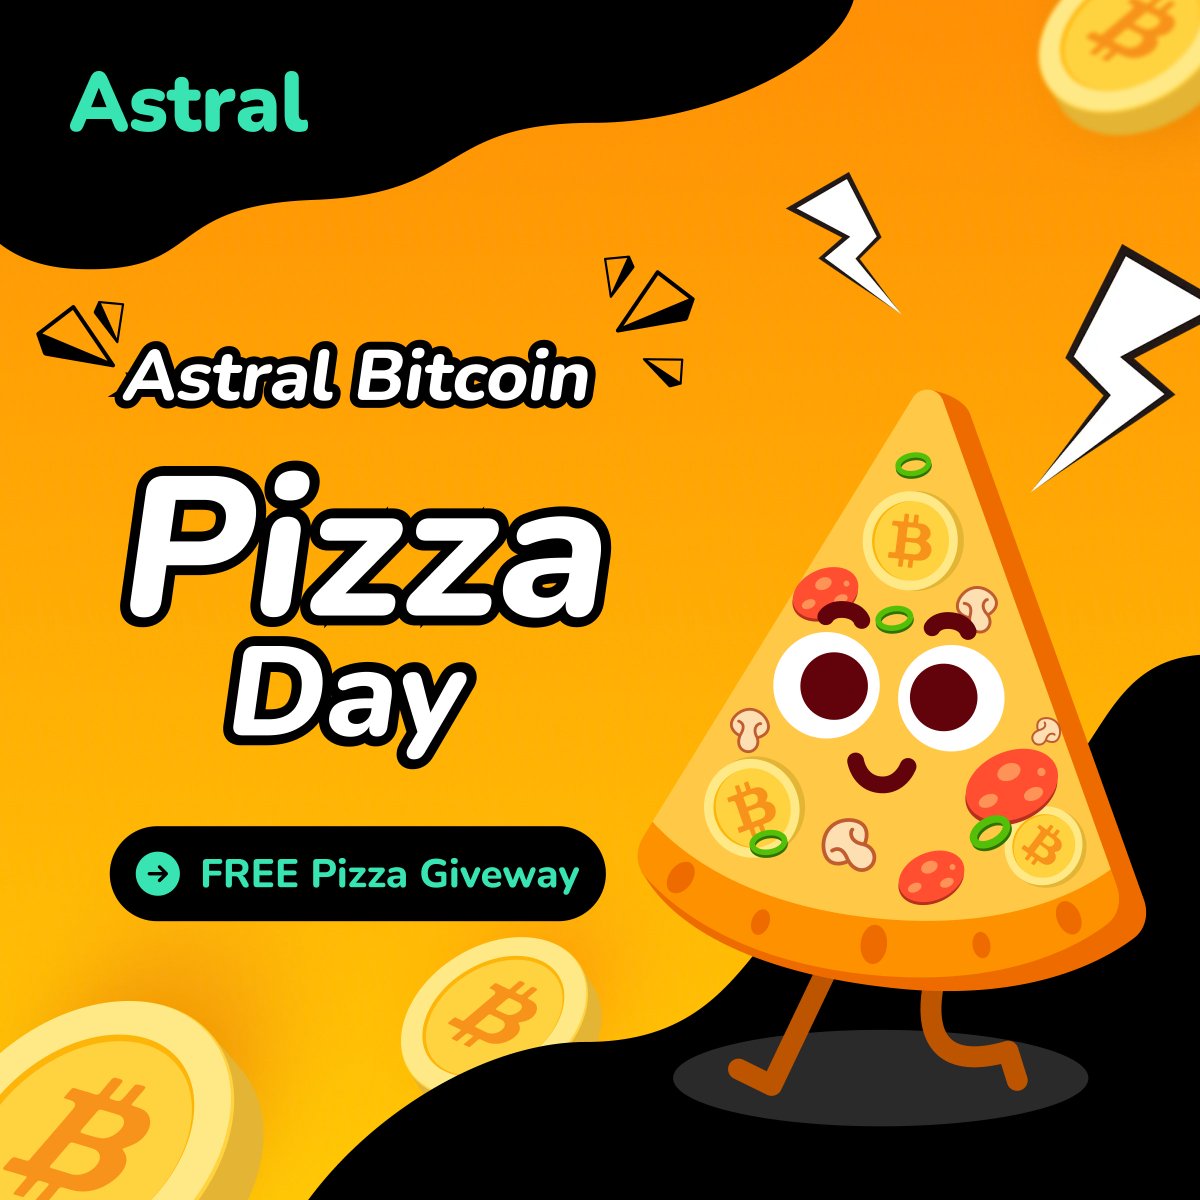 🎉🍕 Rayakan Hari Pizza Bitcoin bersama kami! 🍕🎉

Kami membagikan pizza GRATIS! Untuk ikut serta:

1⃣ Sukai tweet ini ❤️
2⃣ Komentar di bawah mengapa Anda menyukai Bitcoin! 📝

Semua orang berkesempatan untuk menang! 🍀🍕

#BitcoinPizzaDay #FreePizza #CryptoCelebration